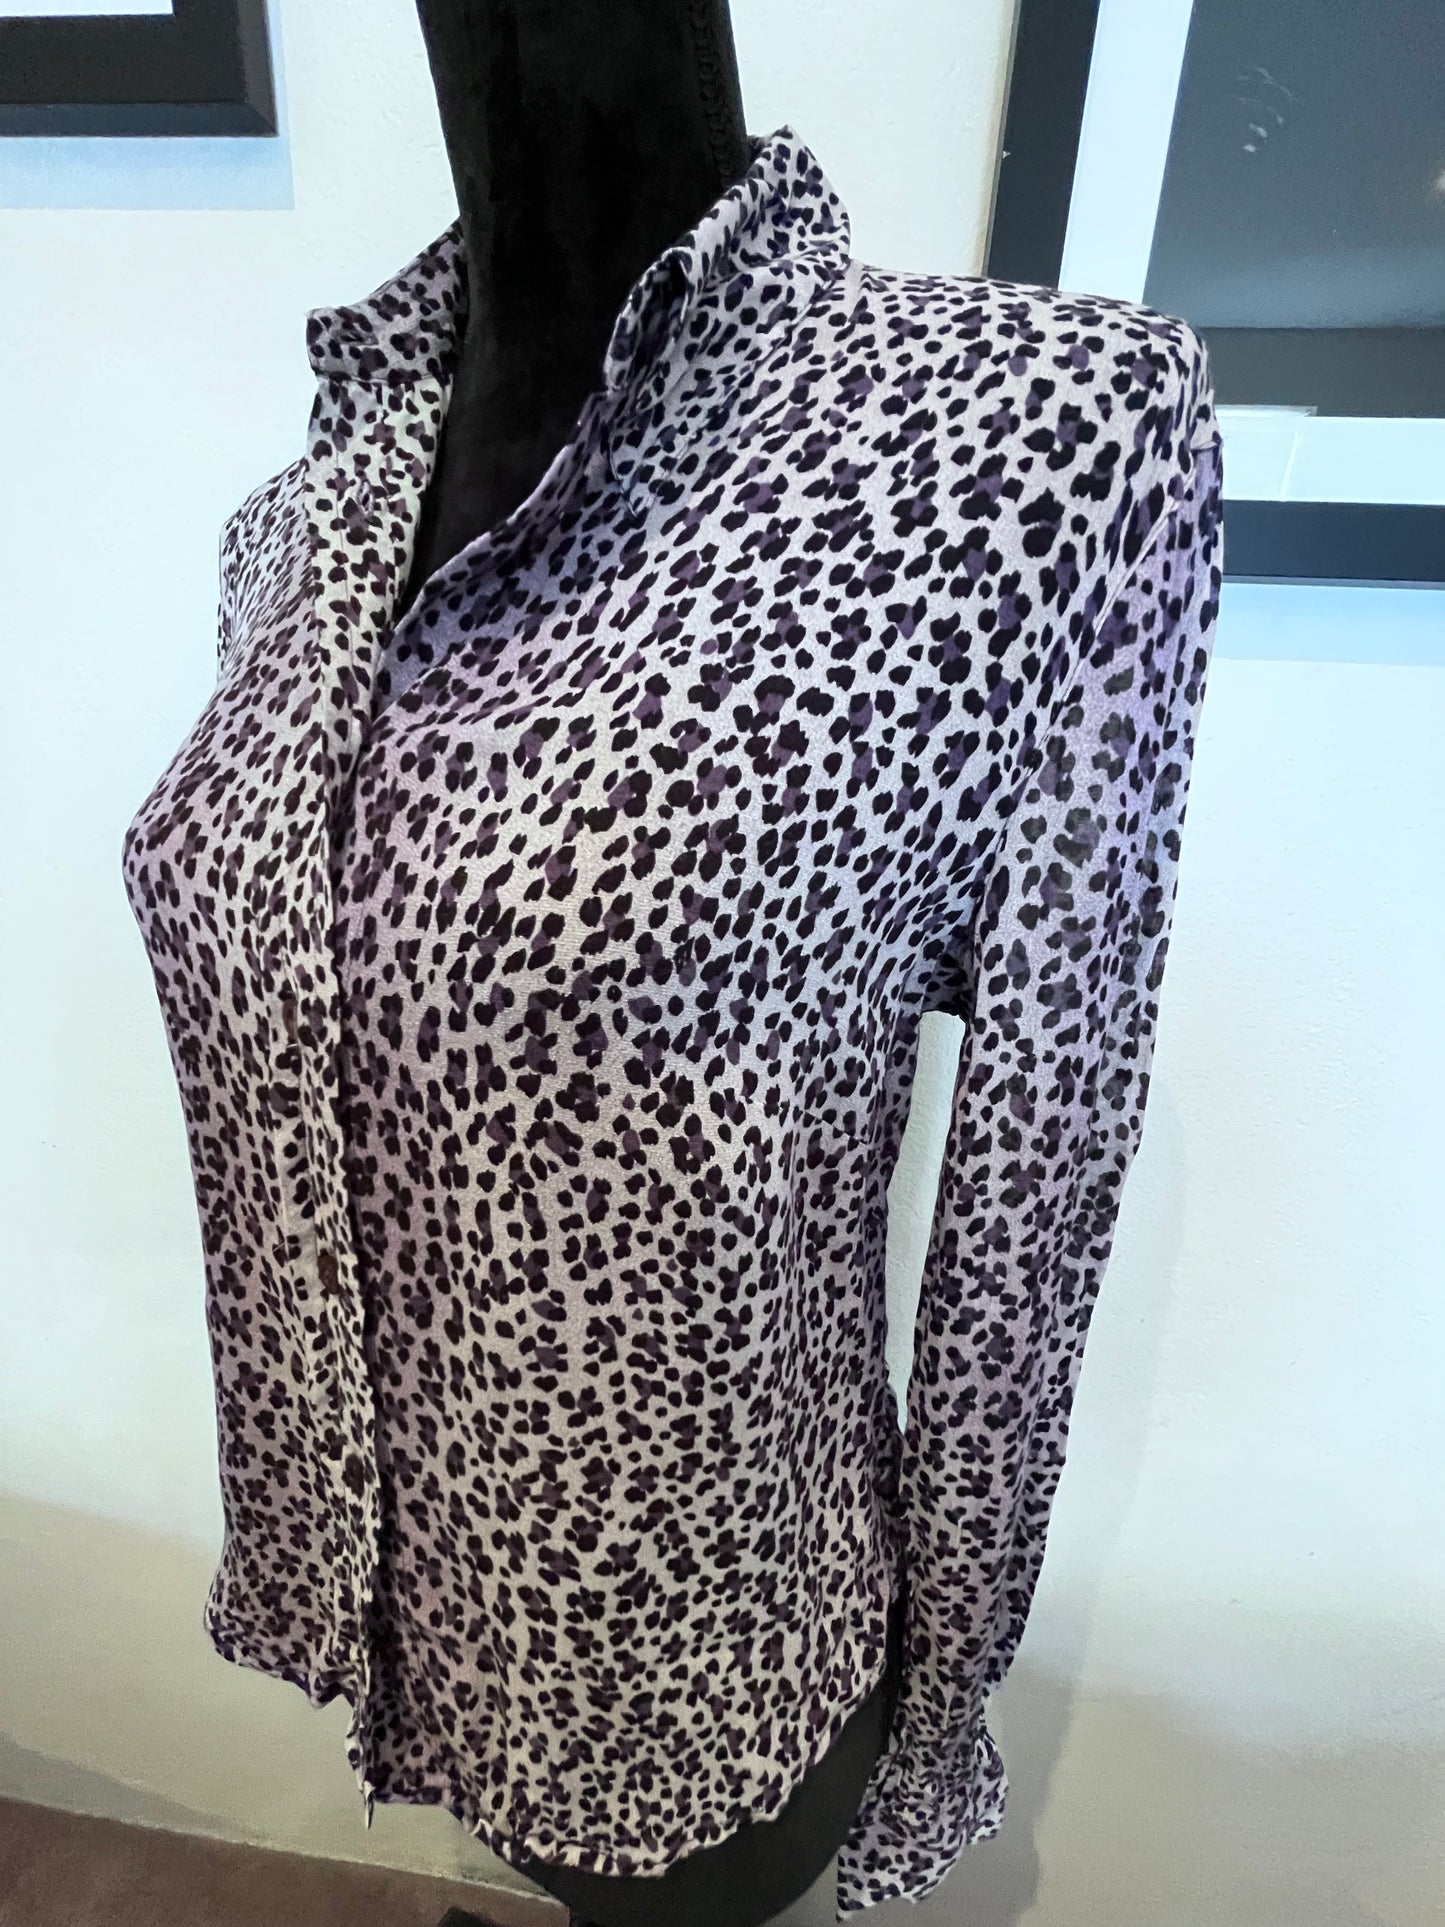 Moschino Women’s Leopard Skin Shirt Size US 8